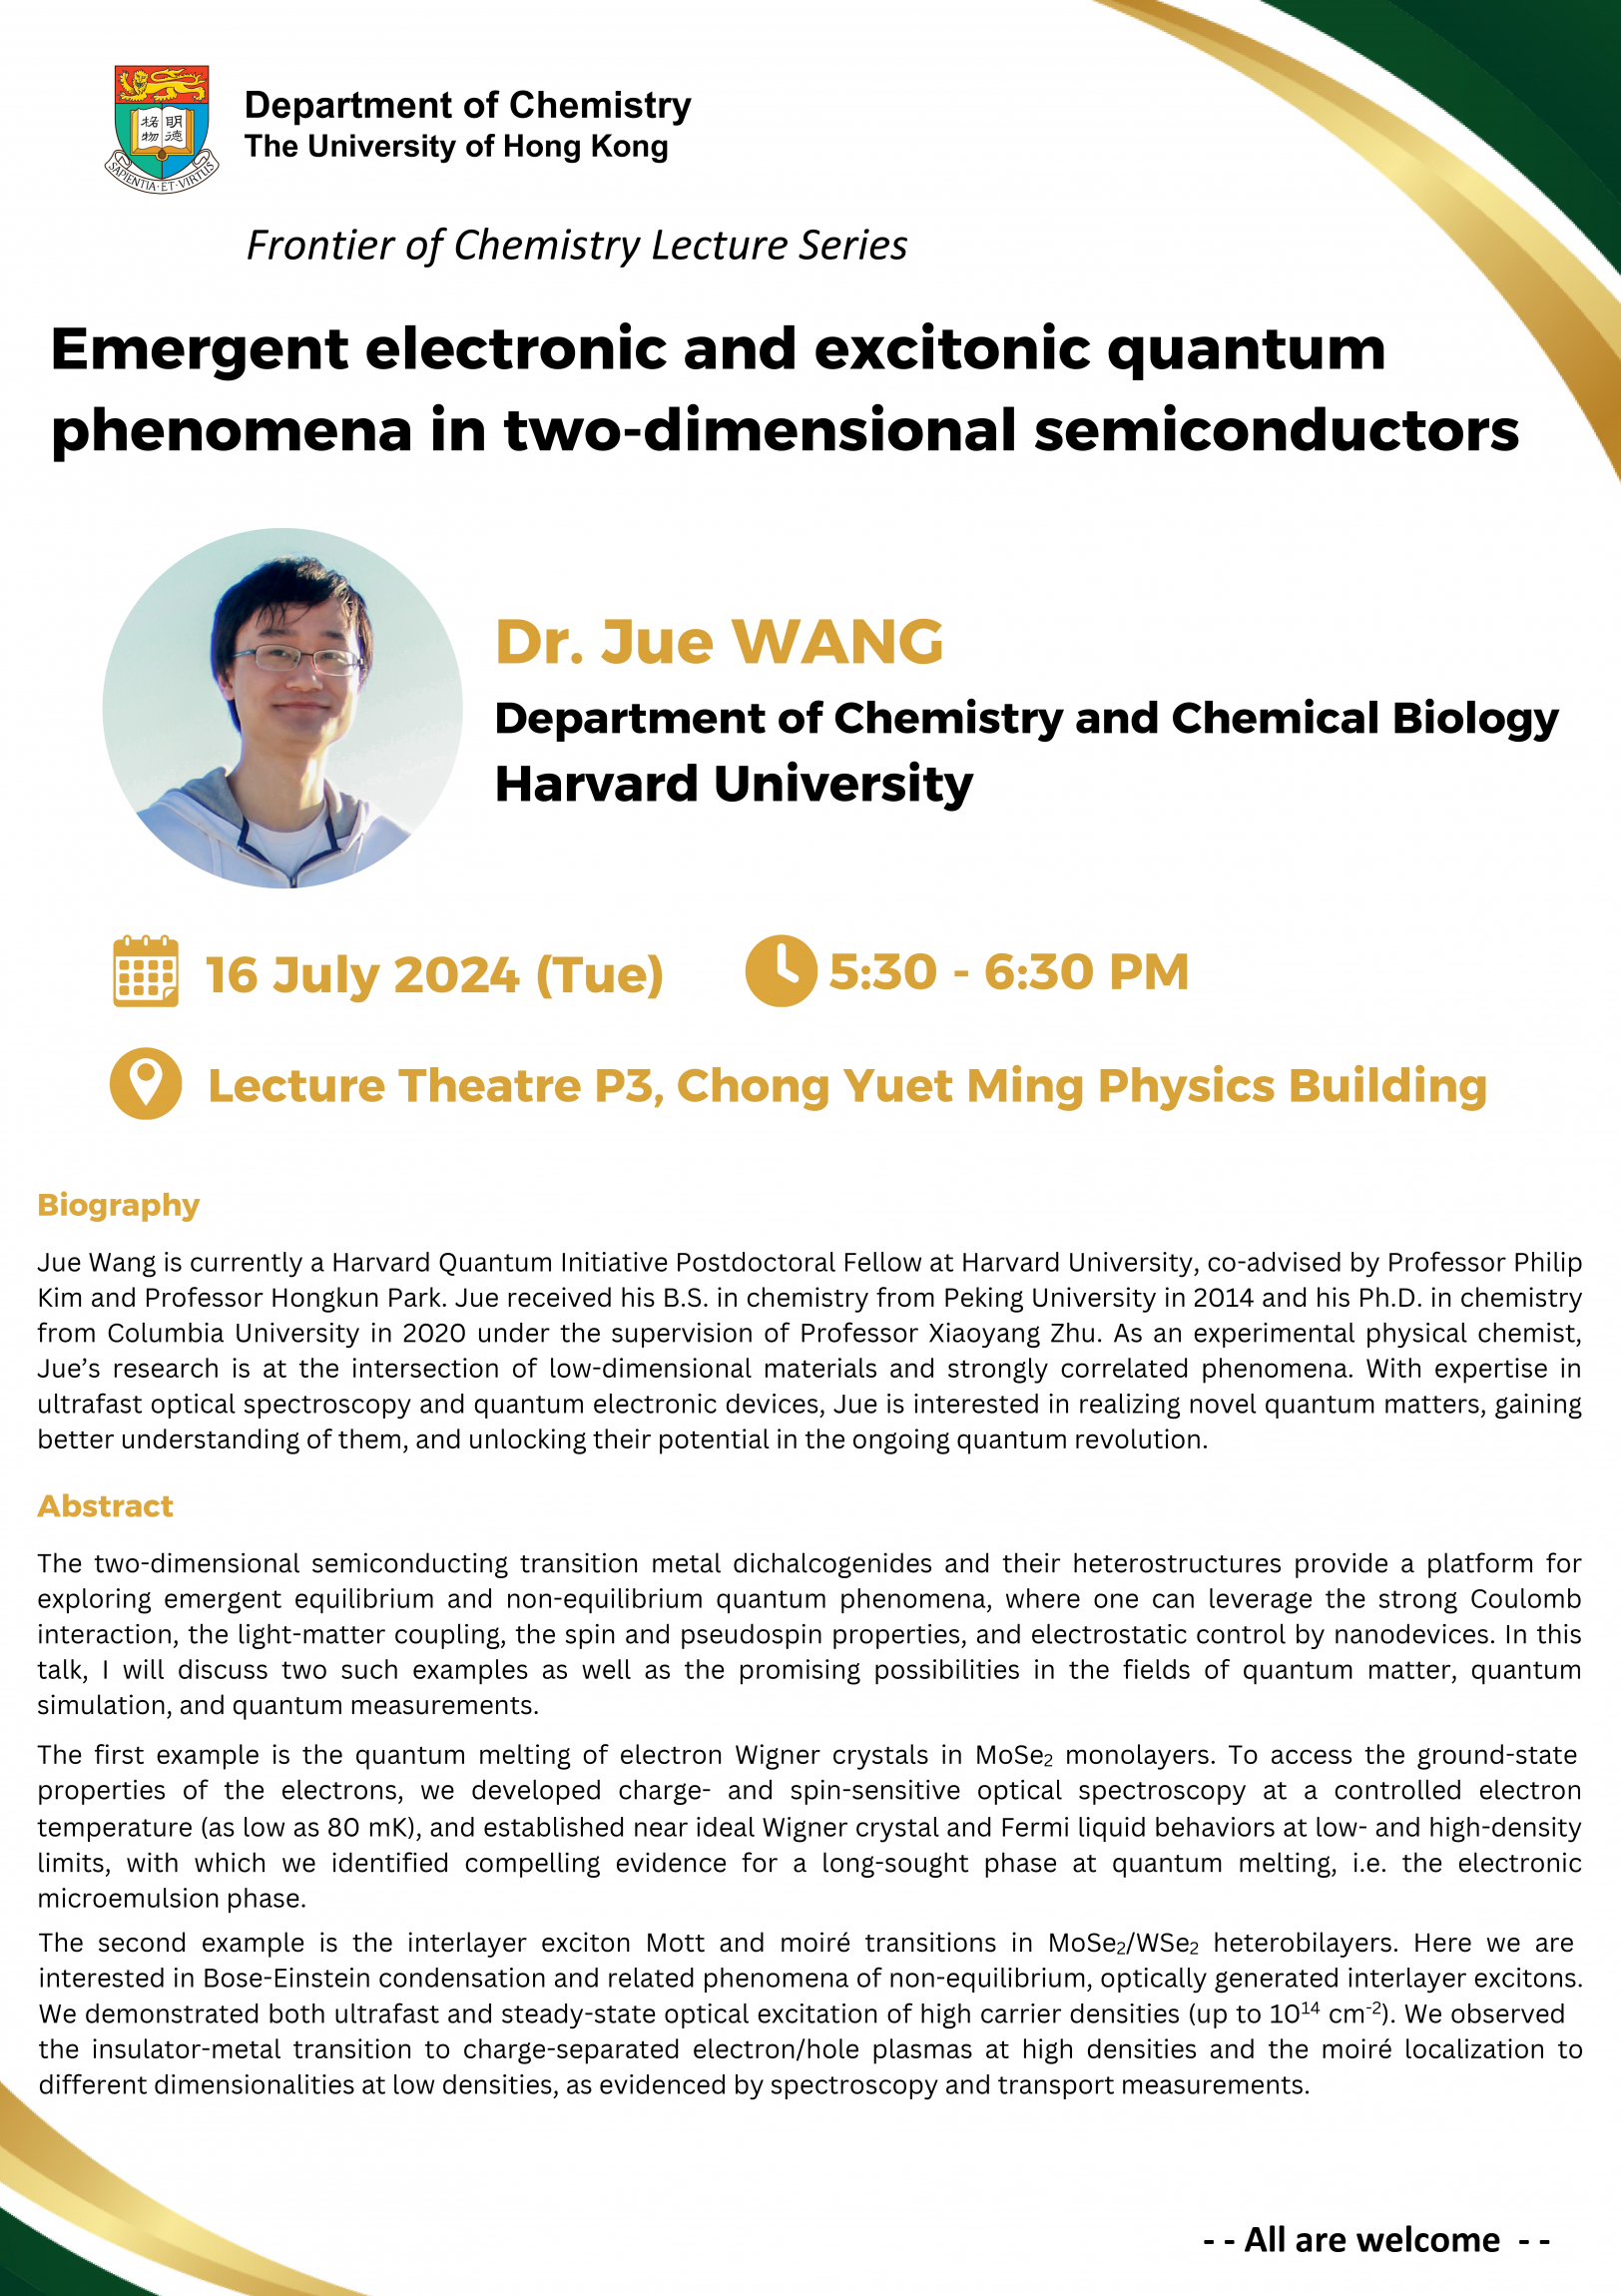 Self Photos / Files - Dr. Jue WANG Seminar poster